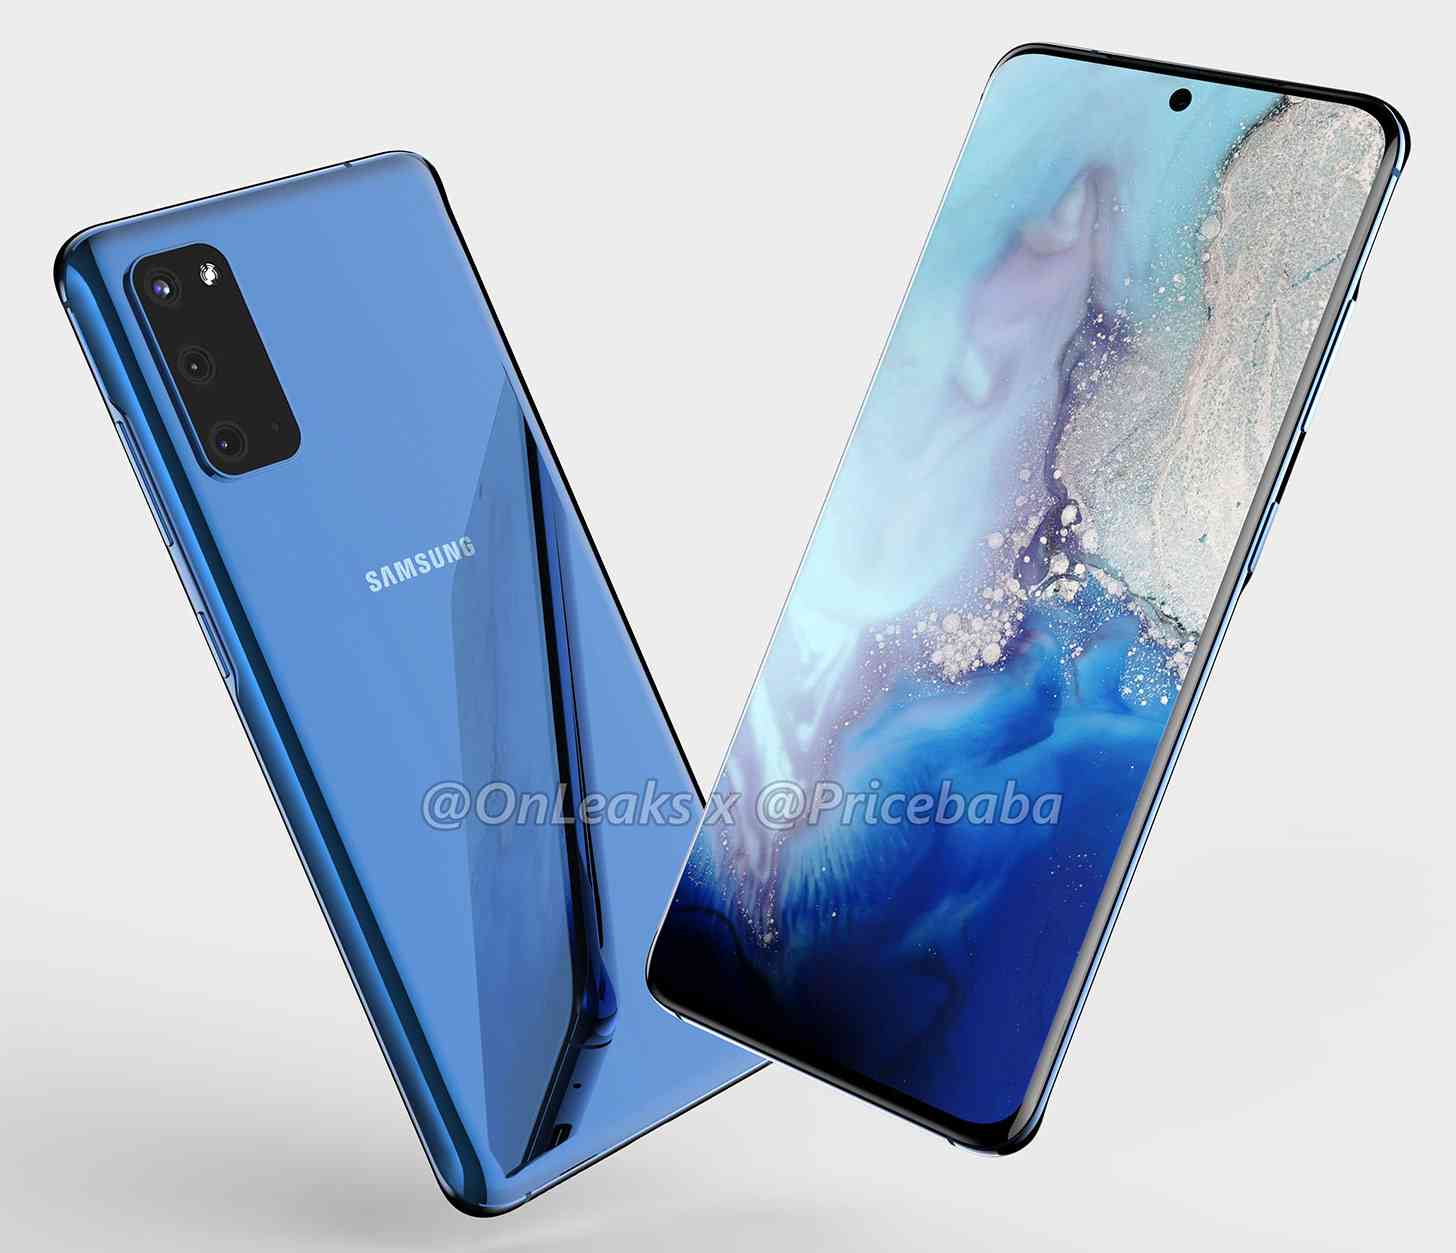 Samsung Galaxy S11e renders